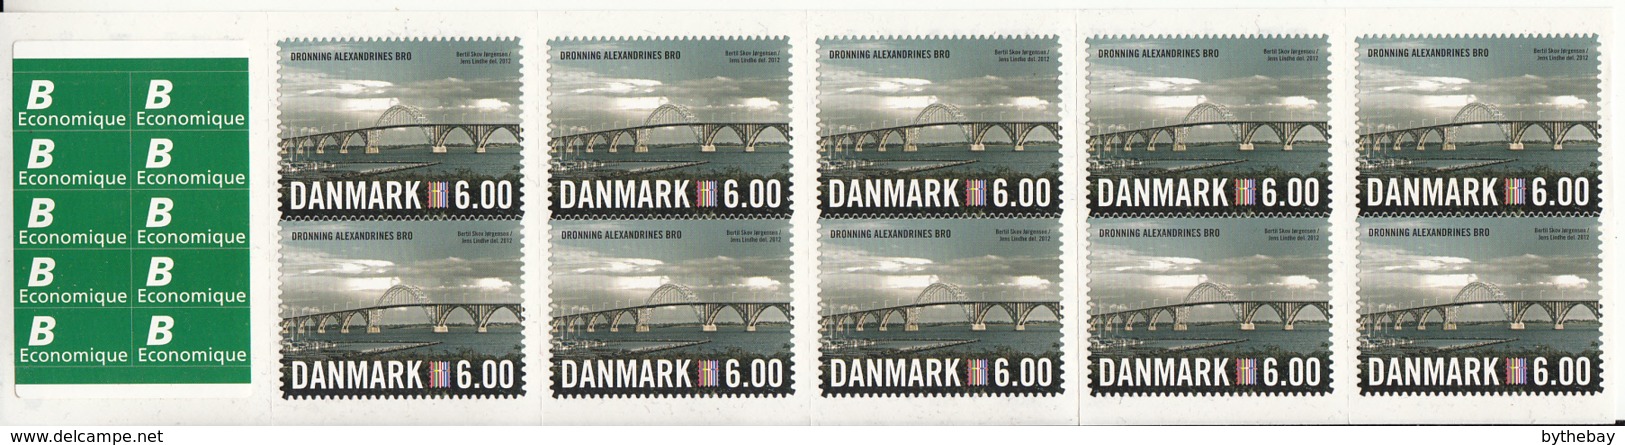 Denmark 2012 MNH Sc #1583a 6k Queen Alexandrine Bridge Booklet Of 10 + 10 Etiquettes - Carnets